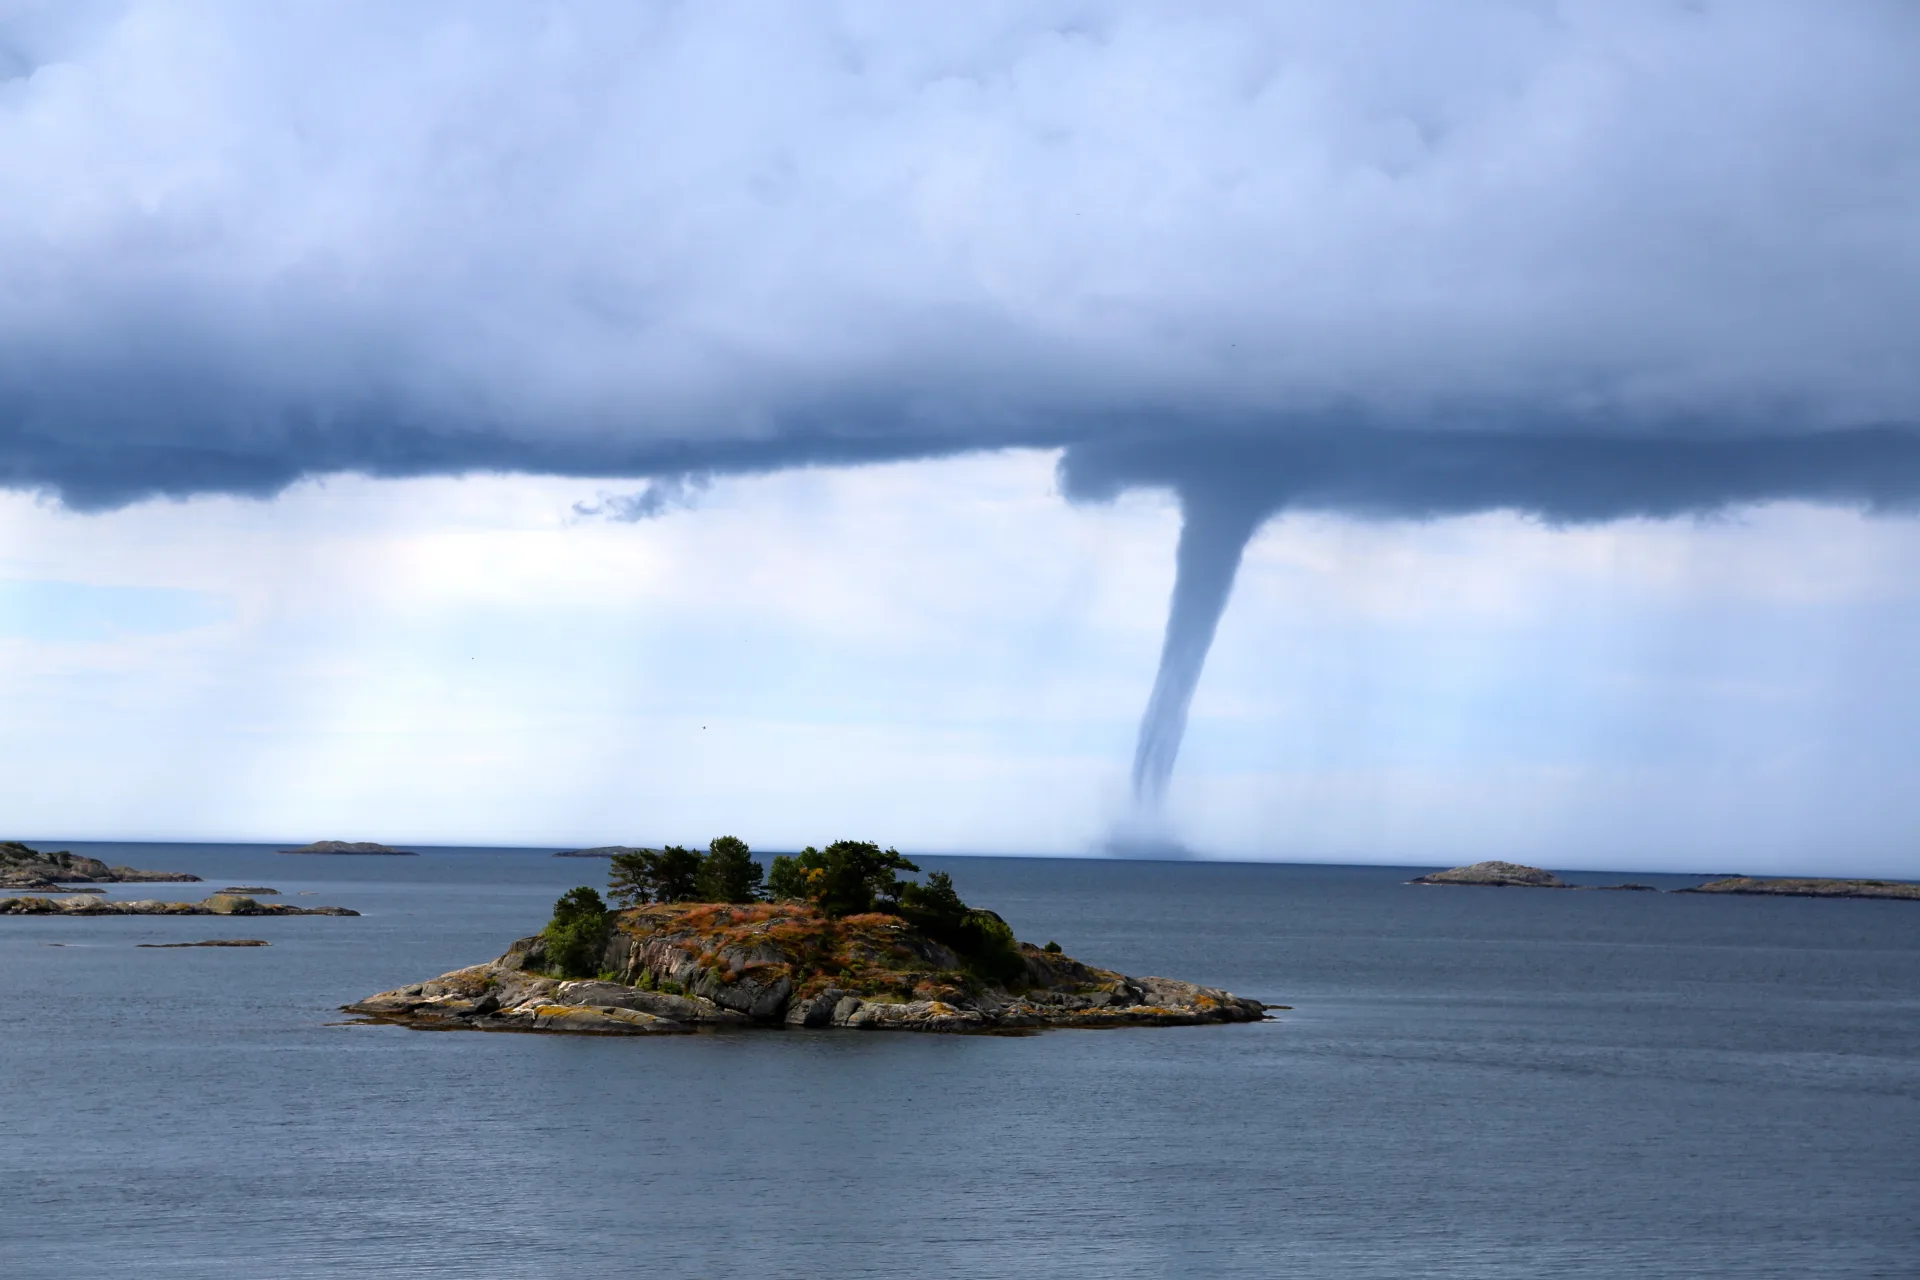 Tornado over the sea with an island